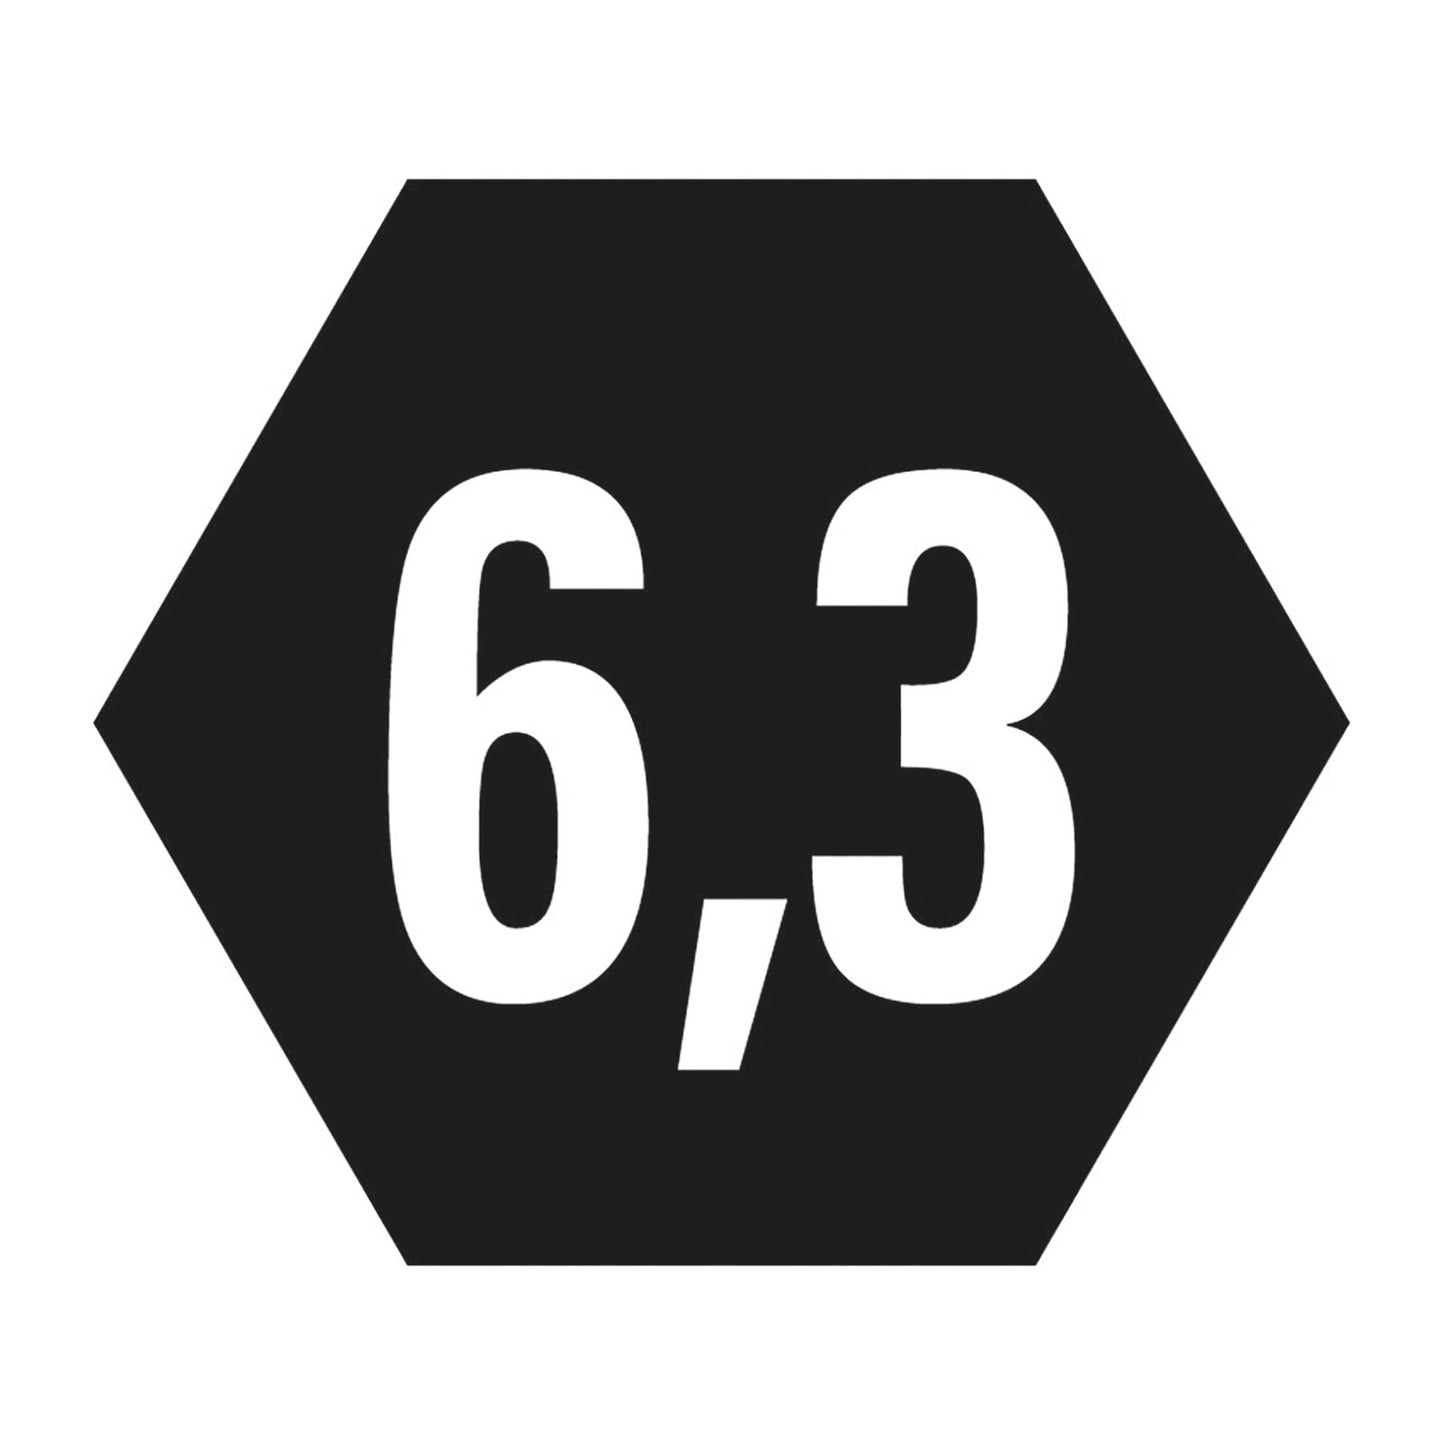 GEDORE 685 2.5 S-010 - Hexagonal Bit 1/4", 2.5 mm (6538880)